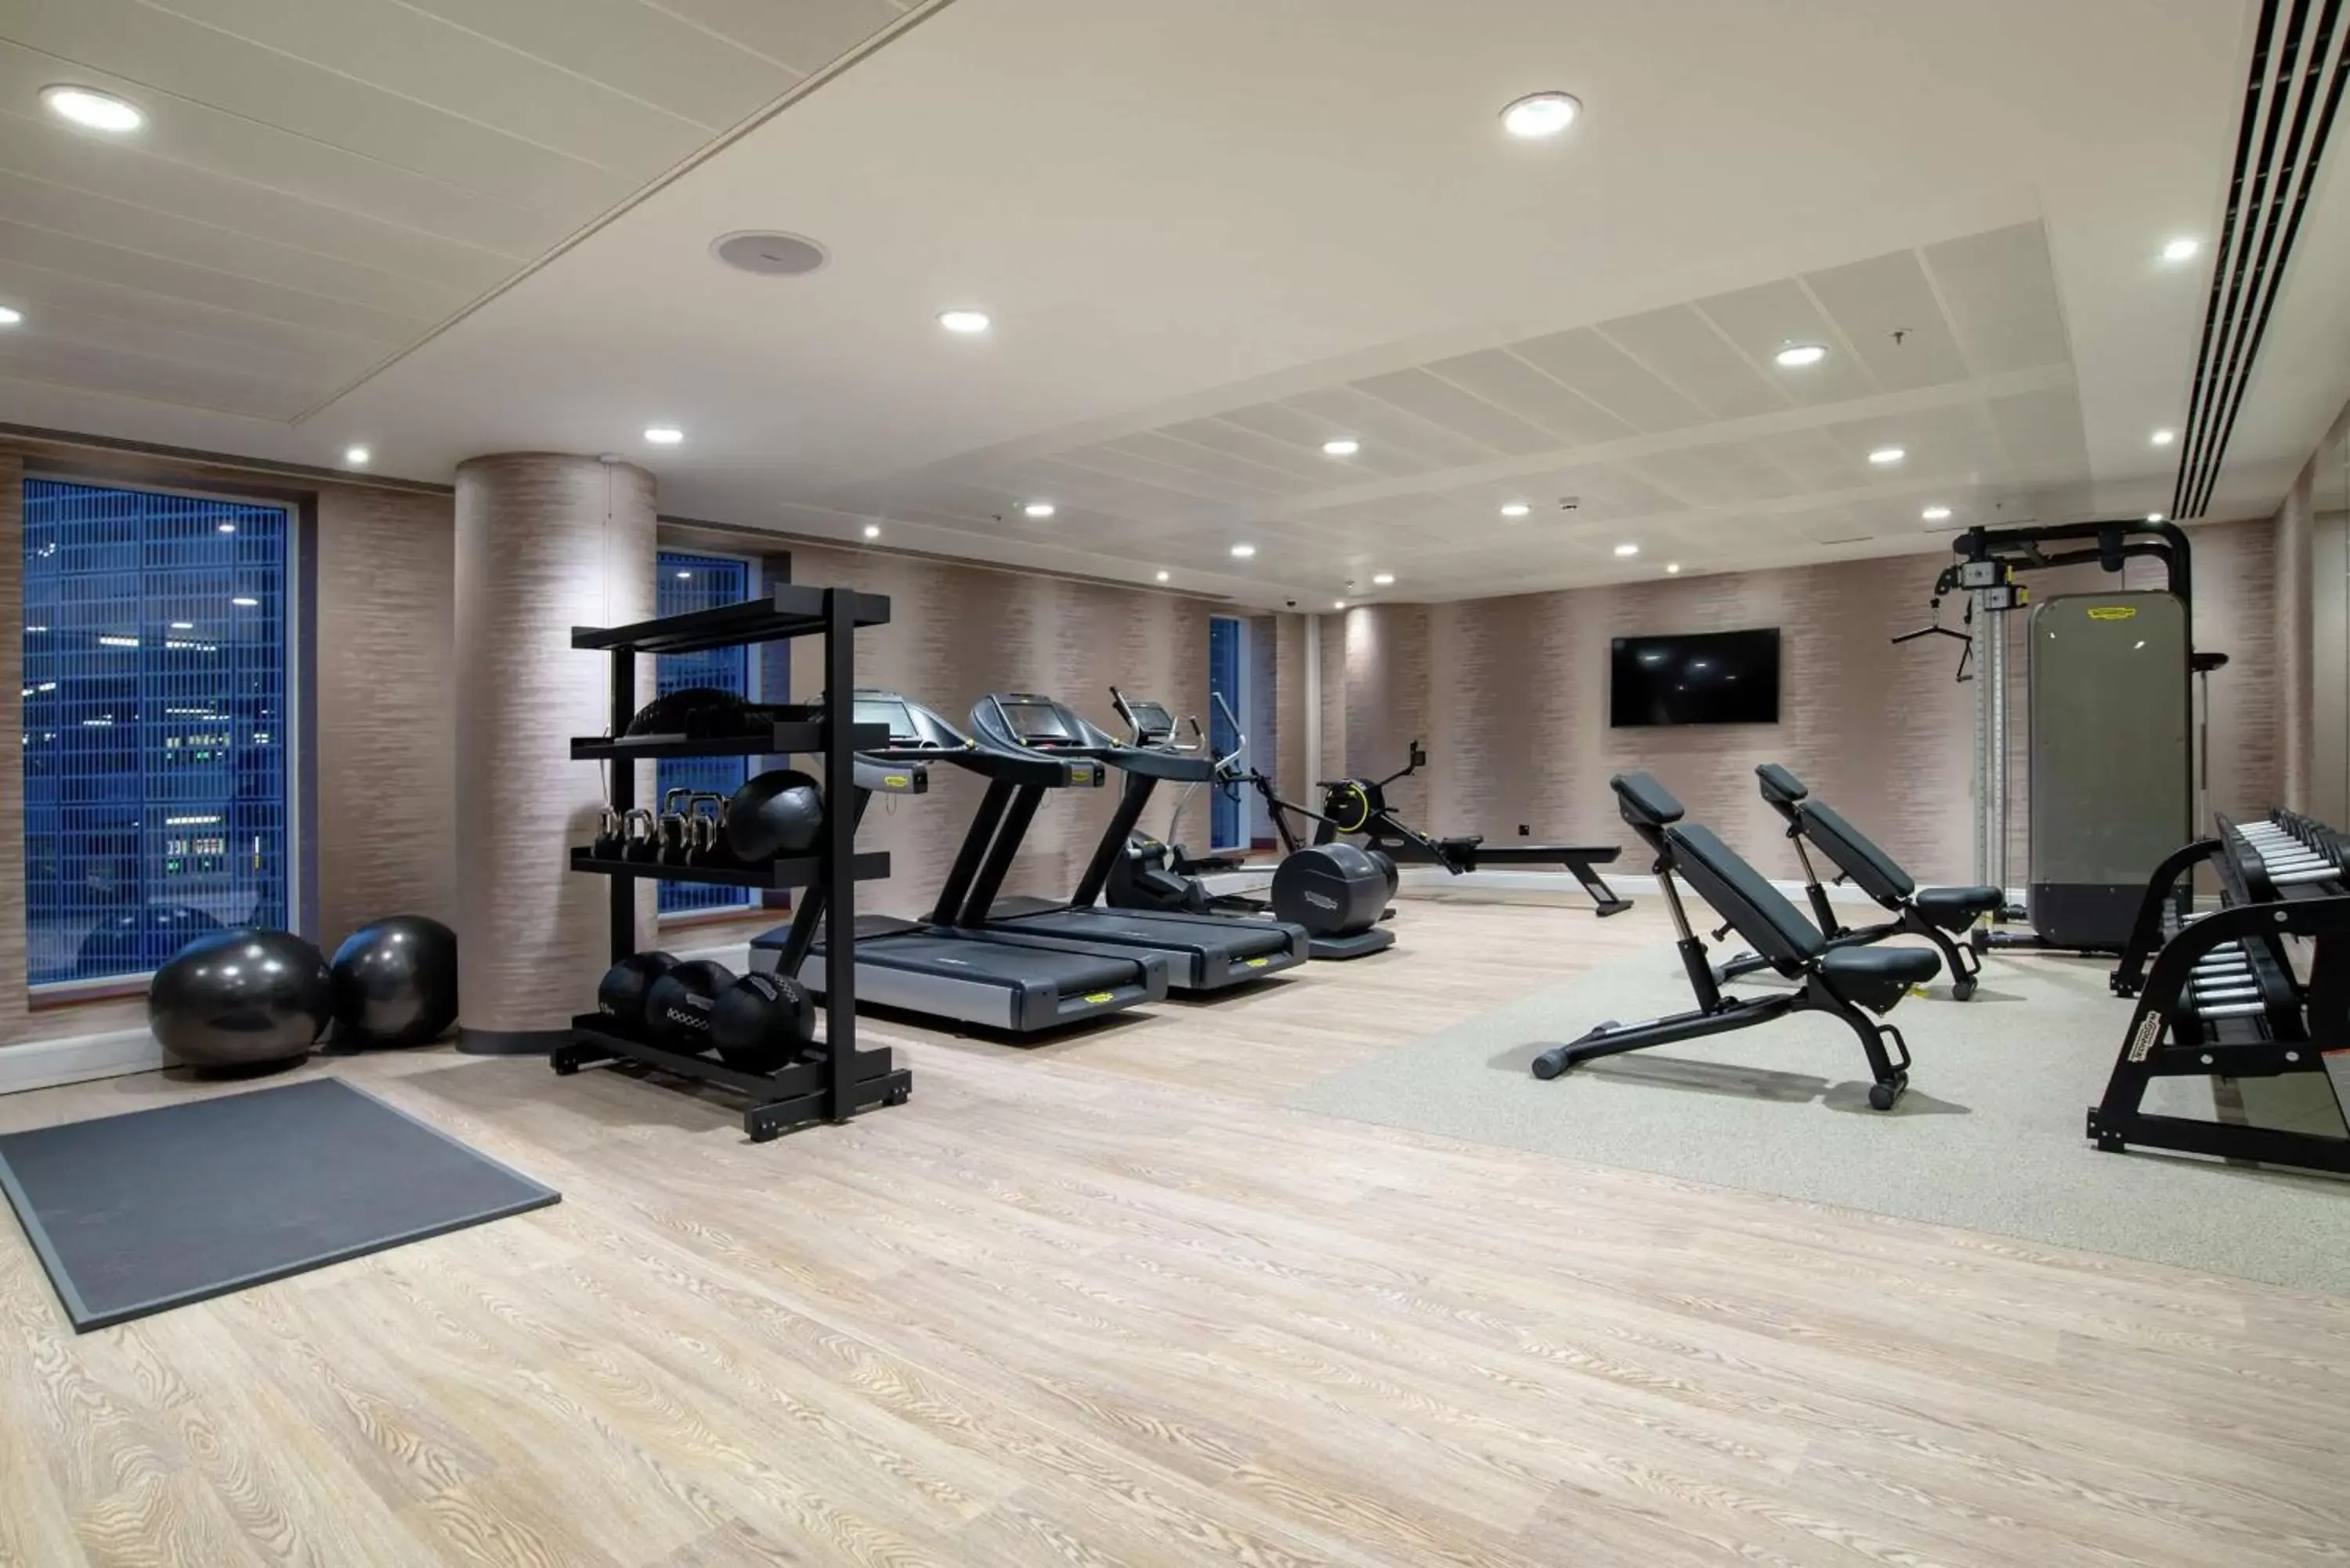 Fitness centre/facilities, Fitness Center/Facilities in Hilton Garden Inn London Heathrow Terminal 2 and 3